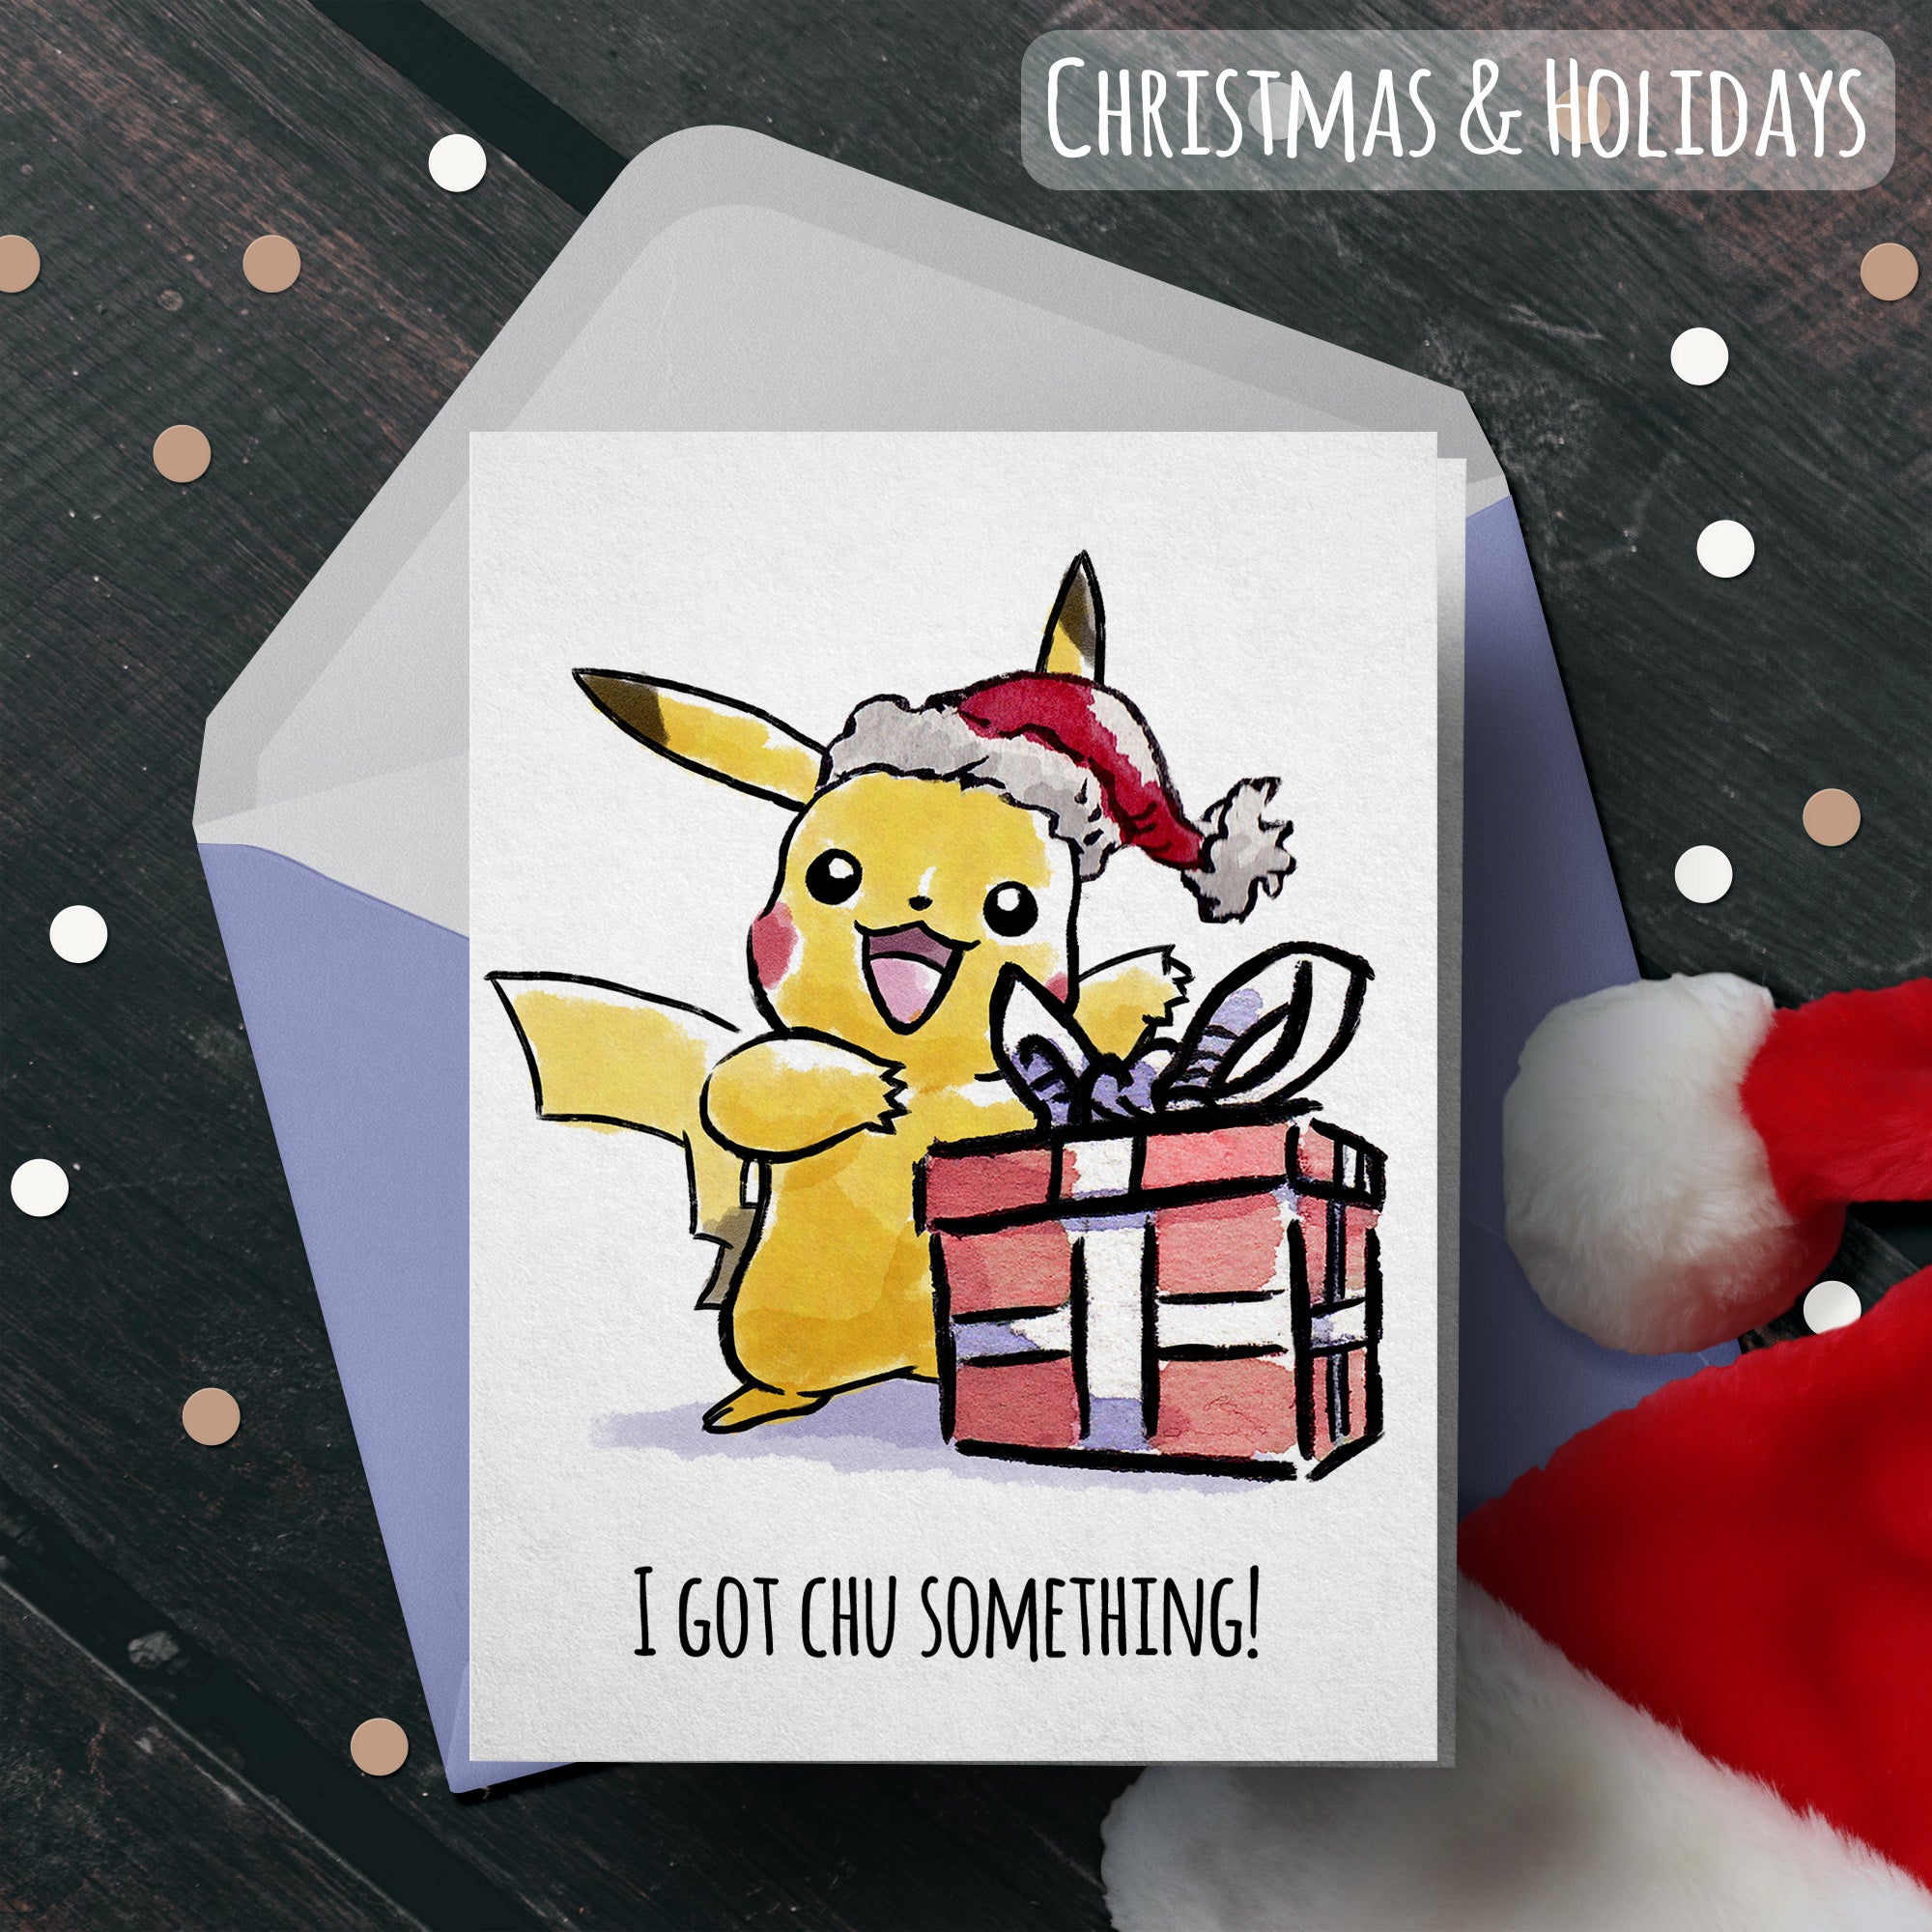  Pokemon Christmas Cards